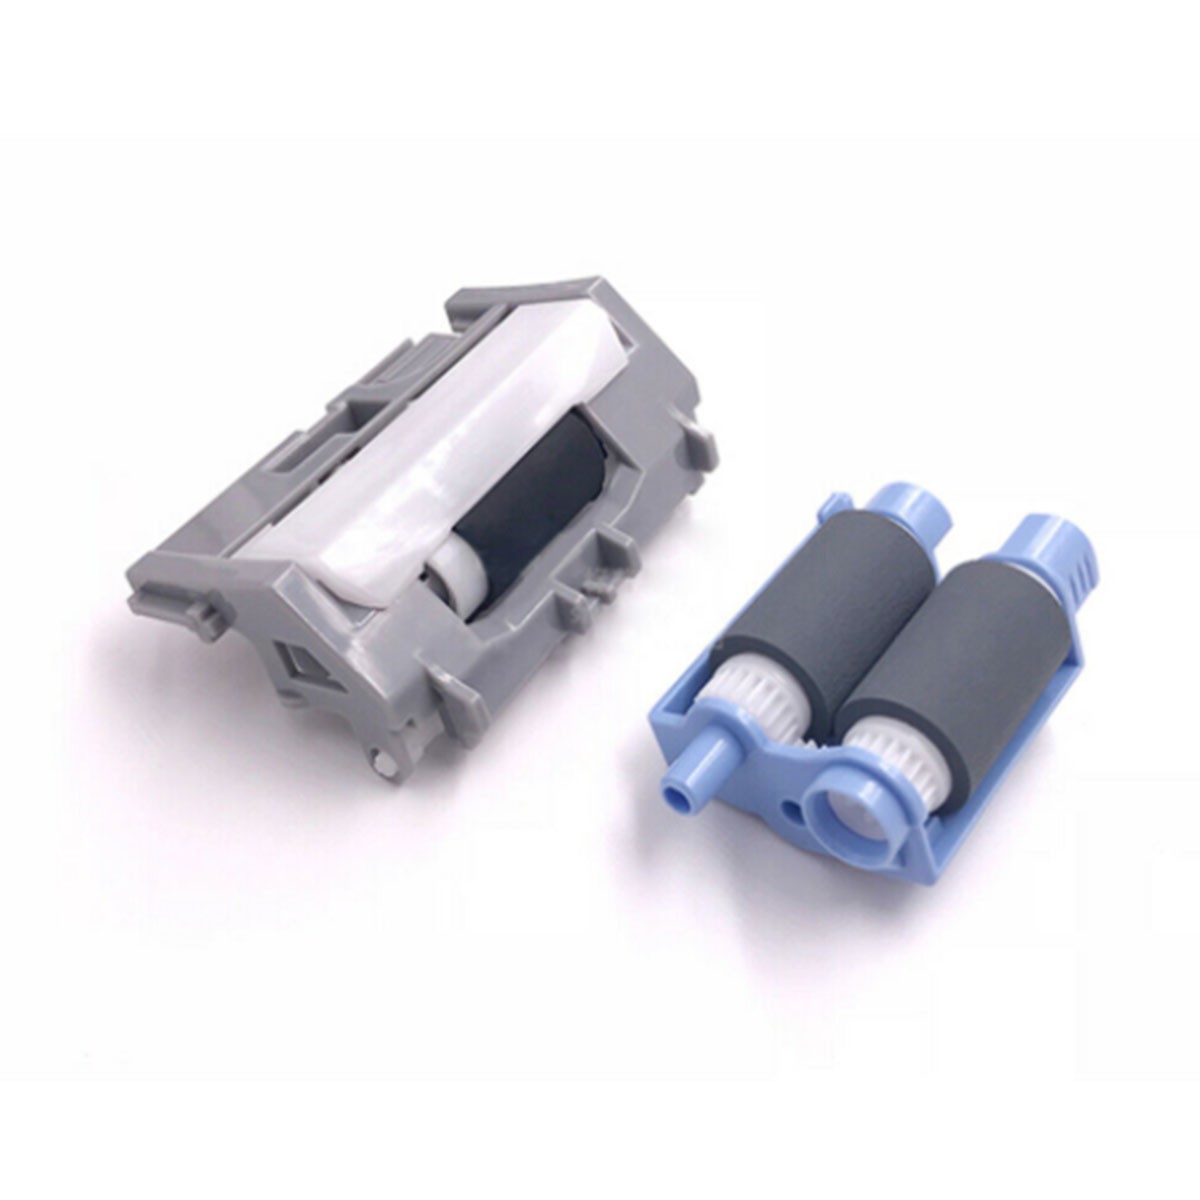 1 Set New Separation Pad & Pickup Roller Kit For HP LJ Pro M402